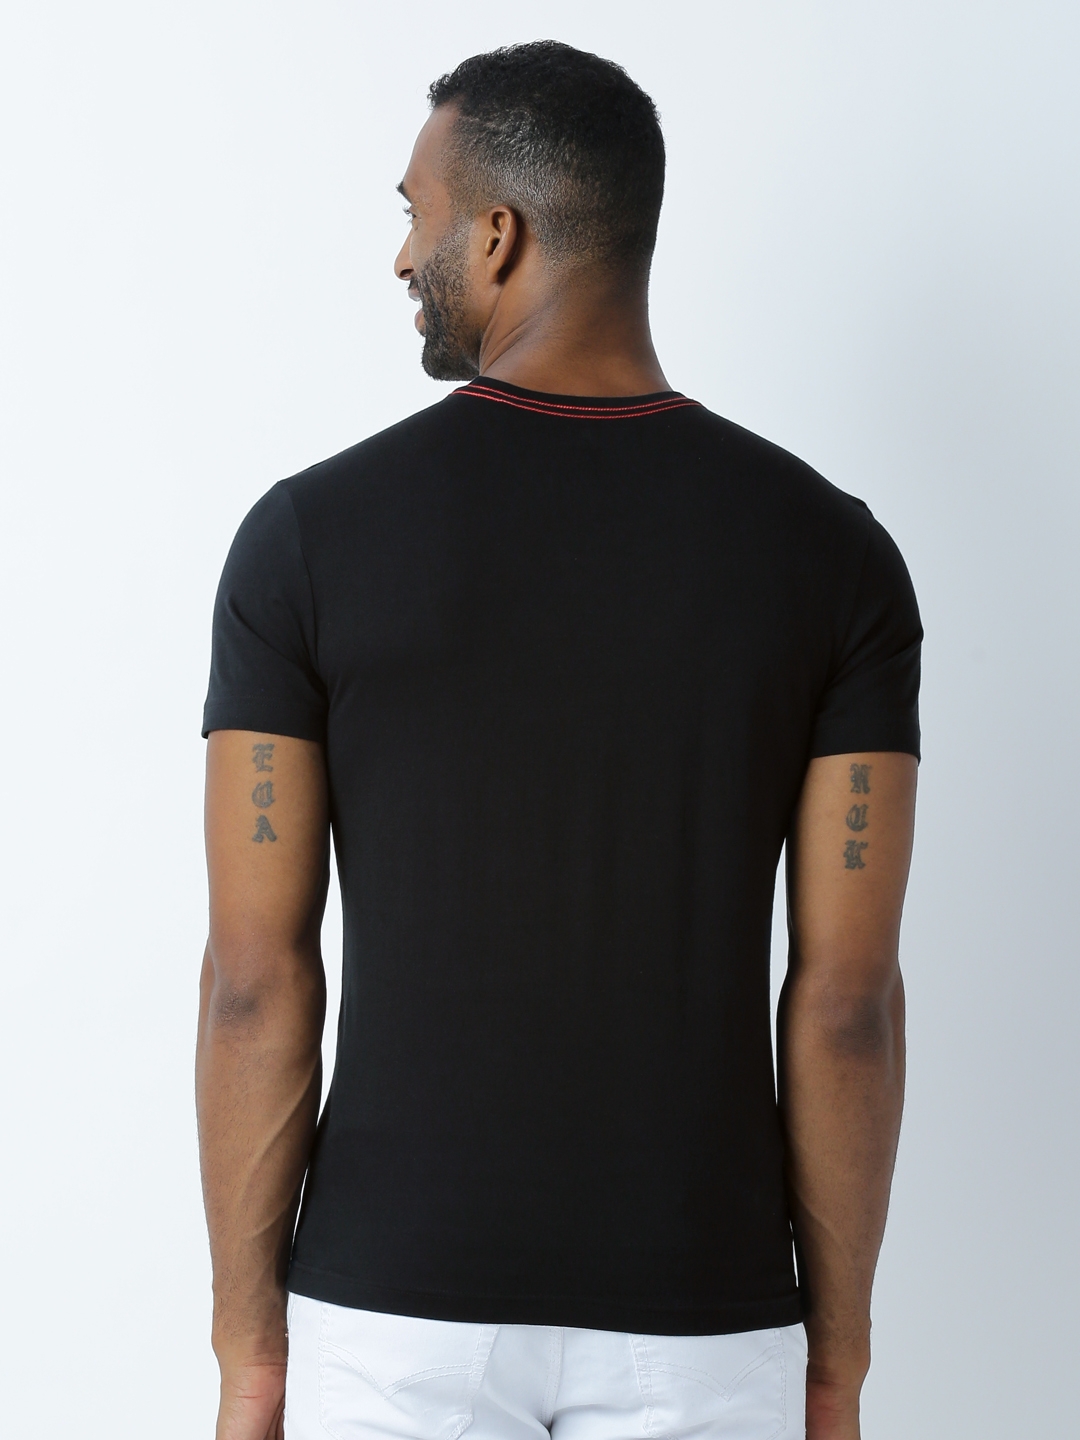 HUETRAP | Huetrap Men's Graphic Round Neck Short Sleeve Black T-Shirt 2